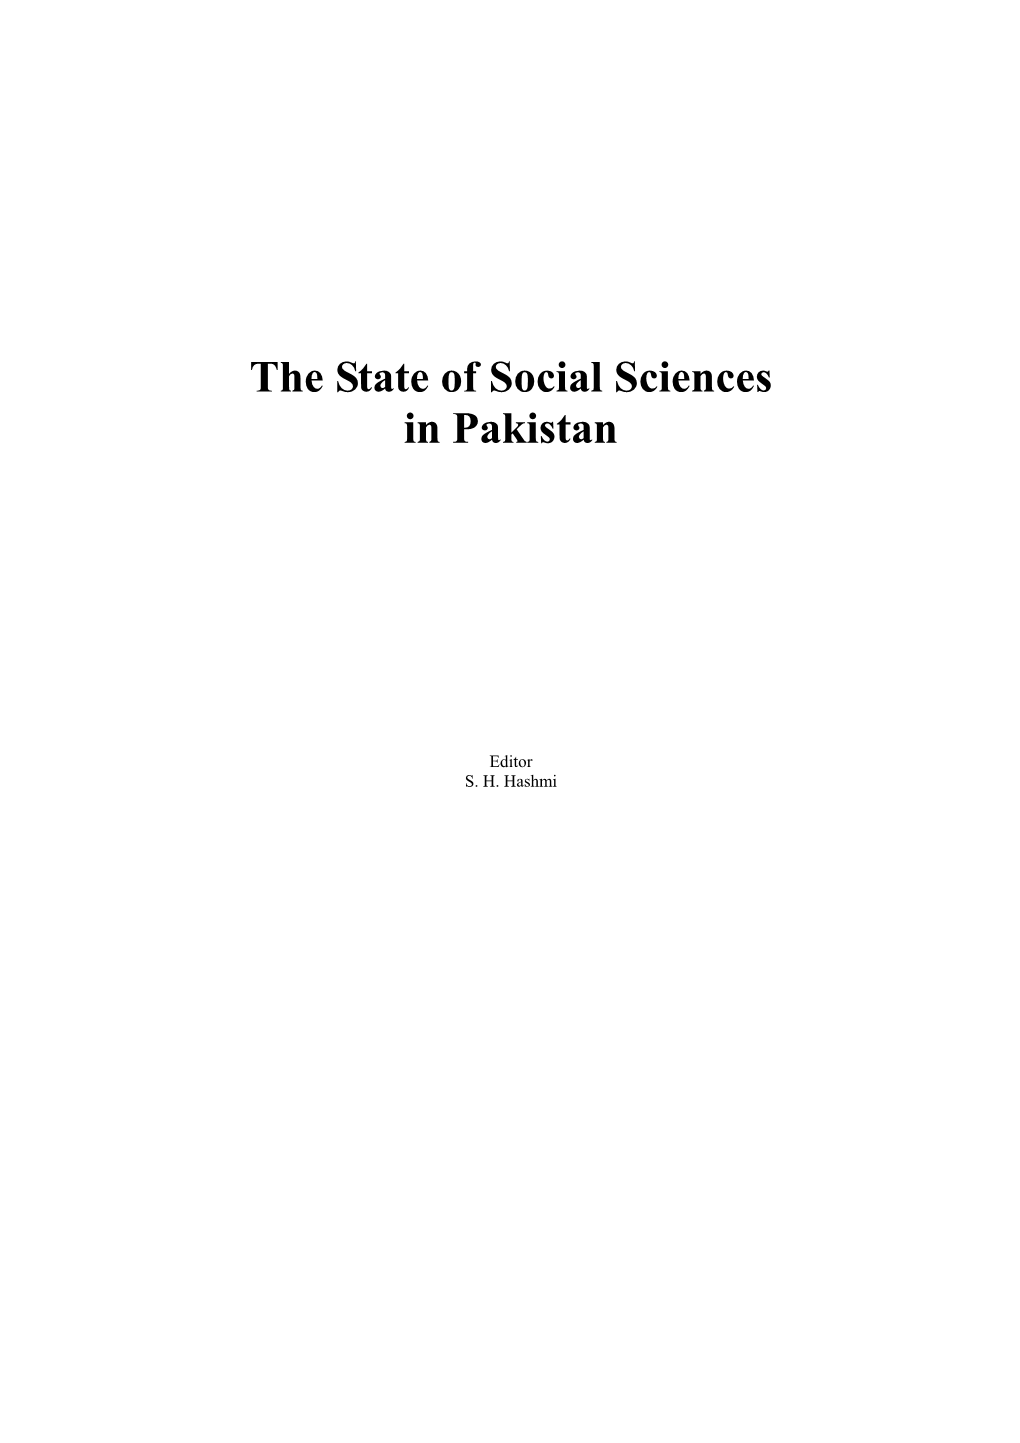 Social Sciences in Pakistan